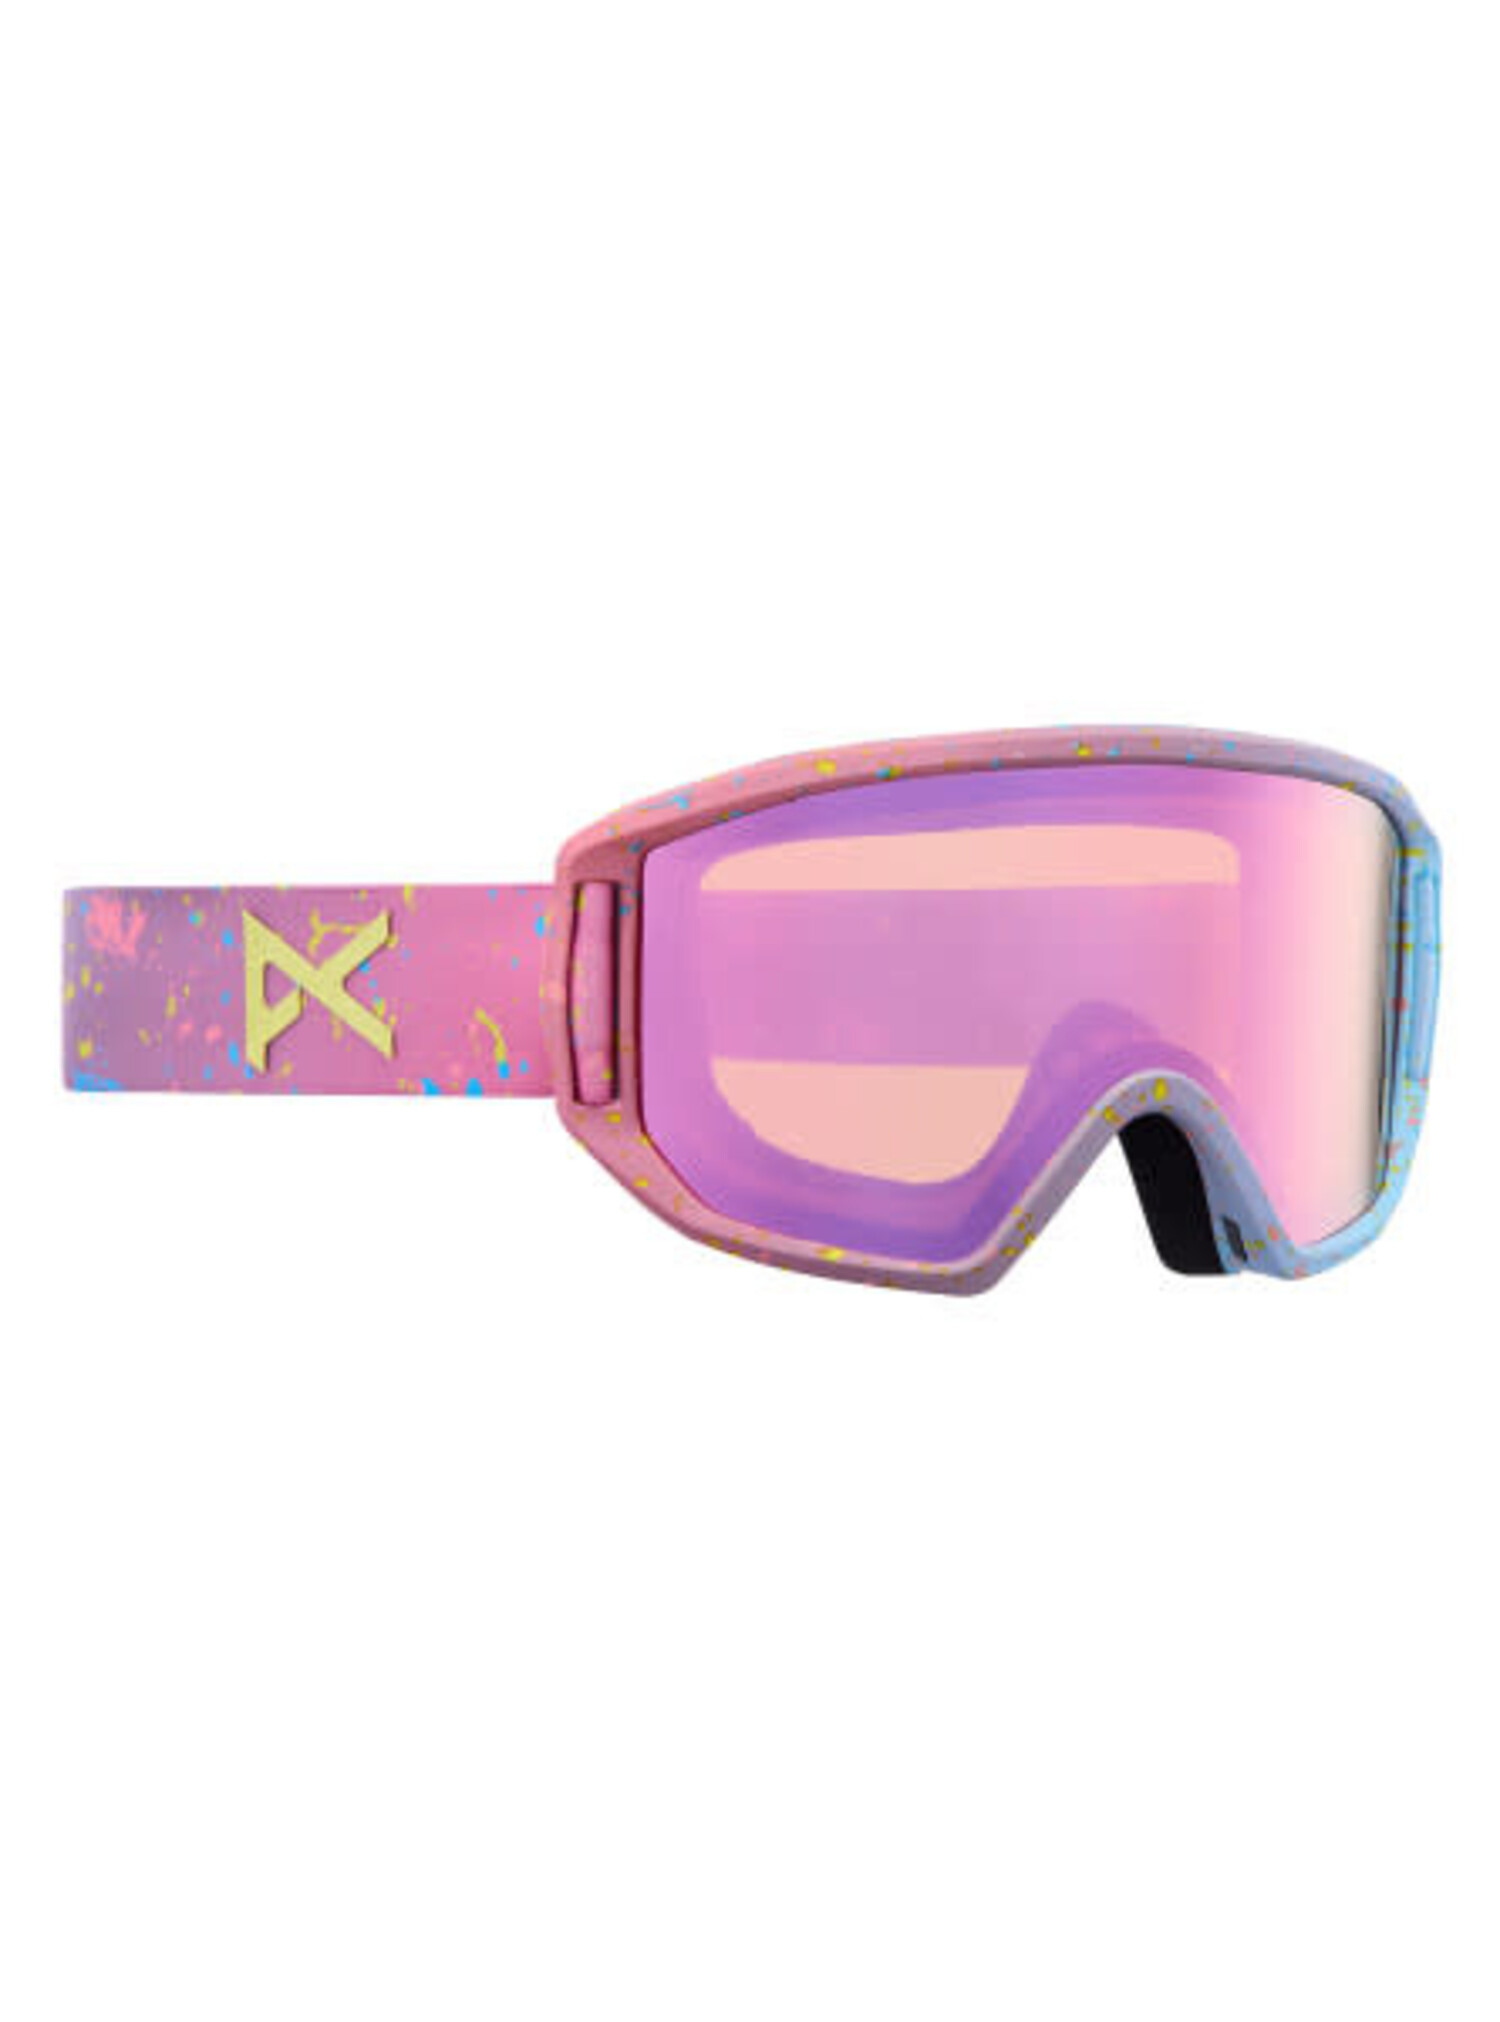 ANON ANON Relapse Jr. Goggles Splatter / Pink Amber + MFI Face Mask